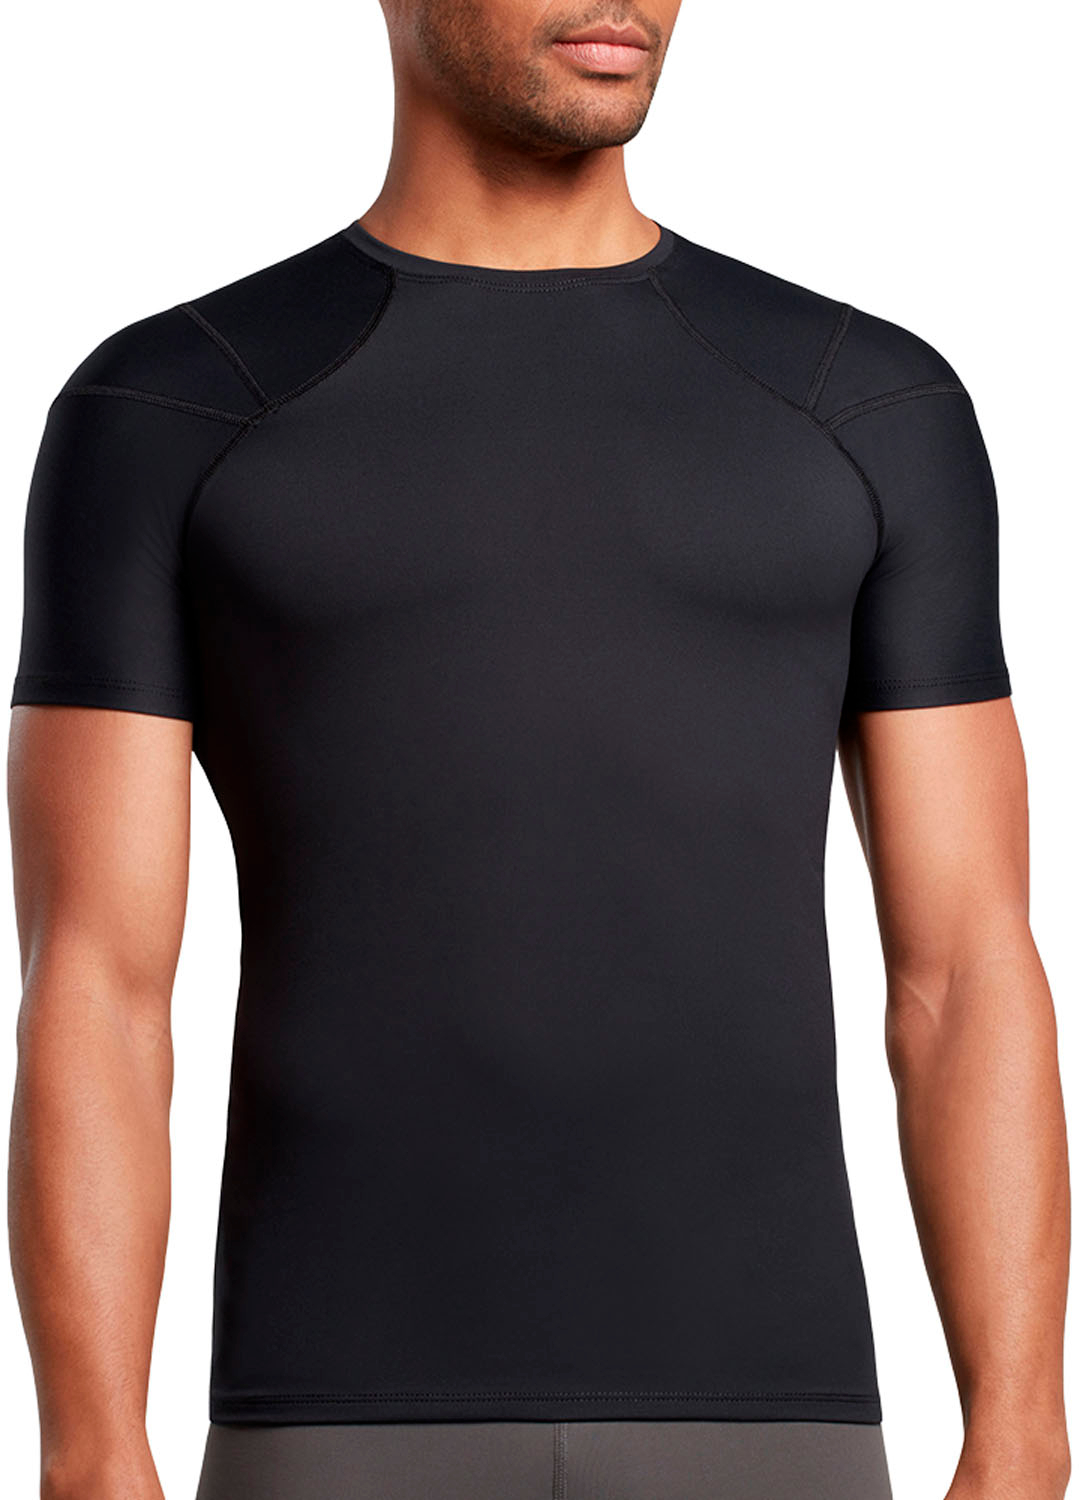 Copper Compression Short Sleeve Shirt - Mens